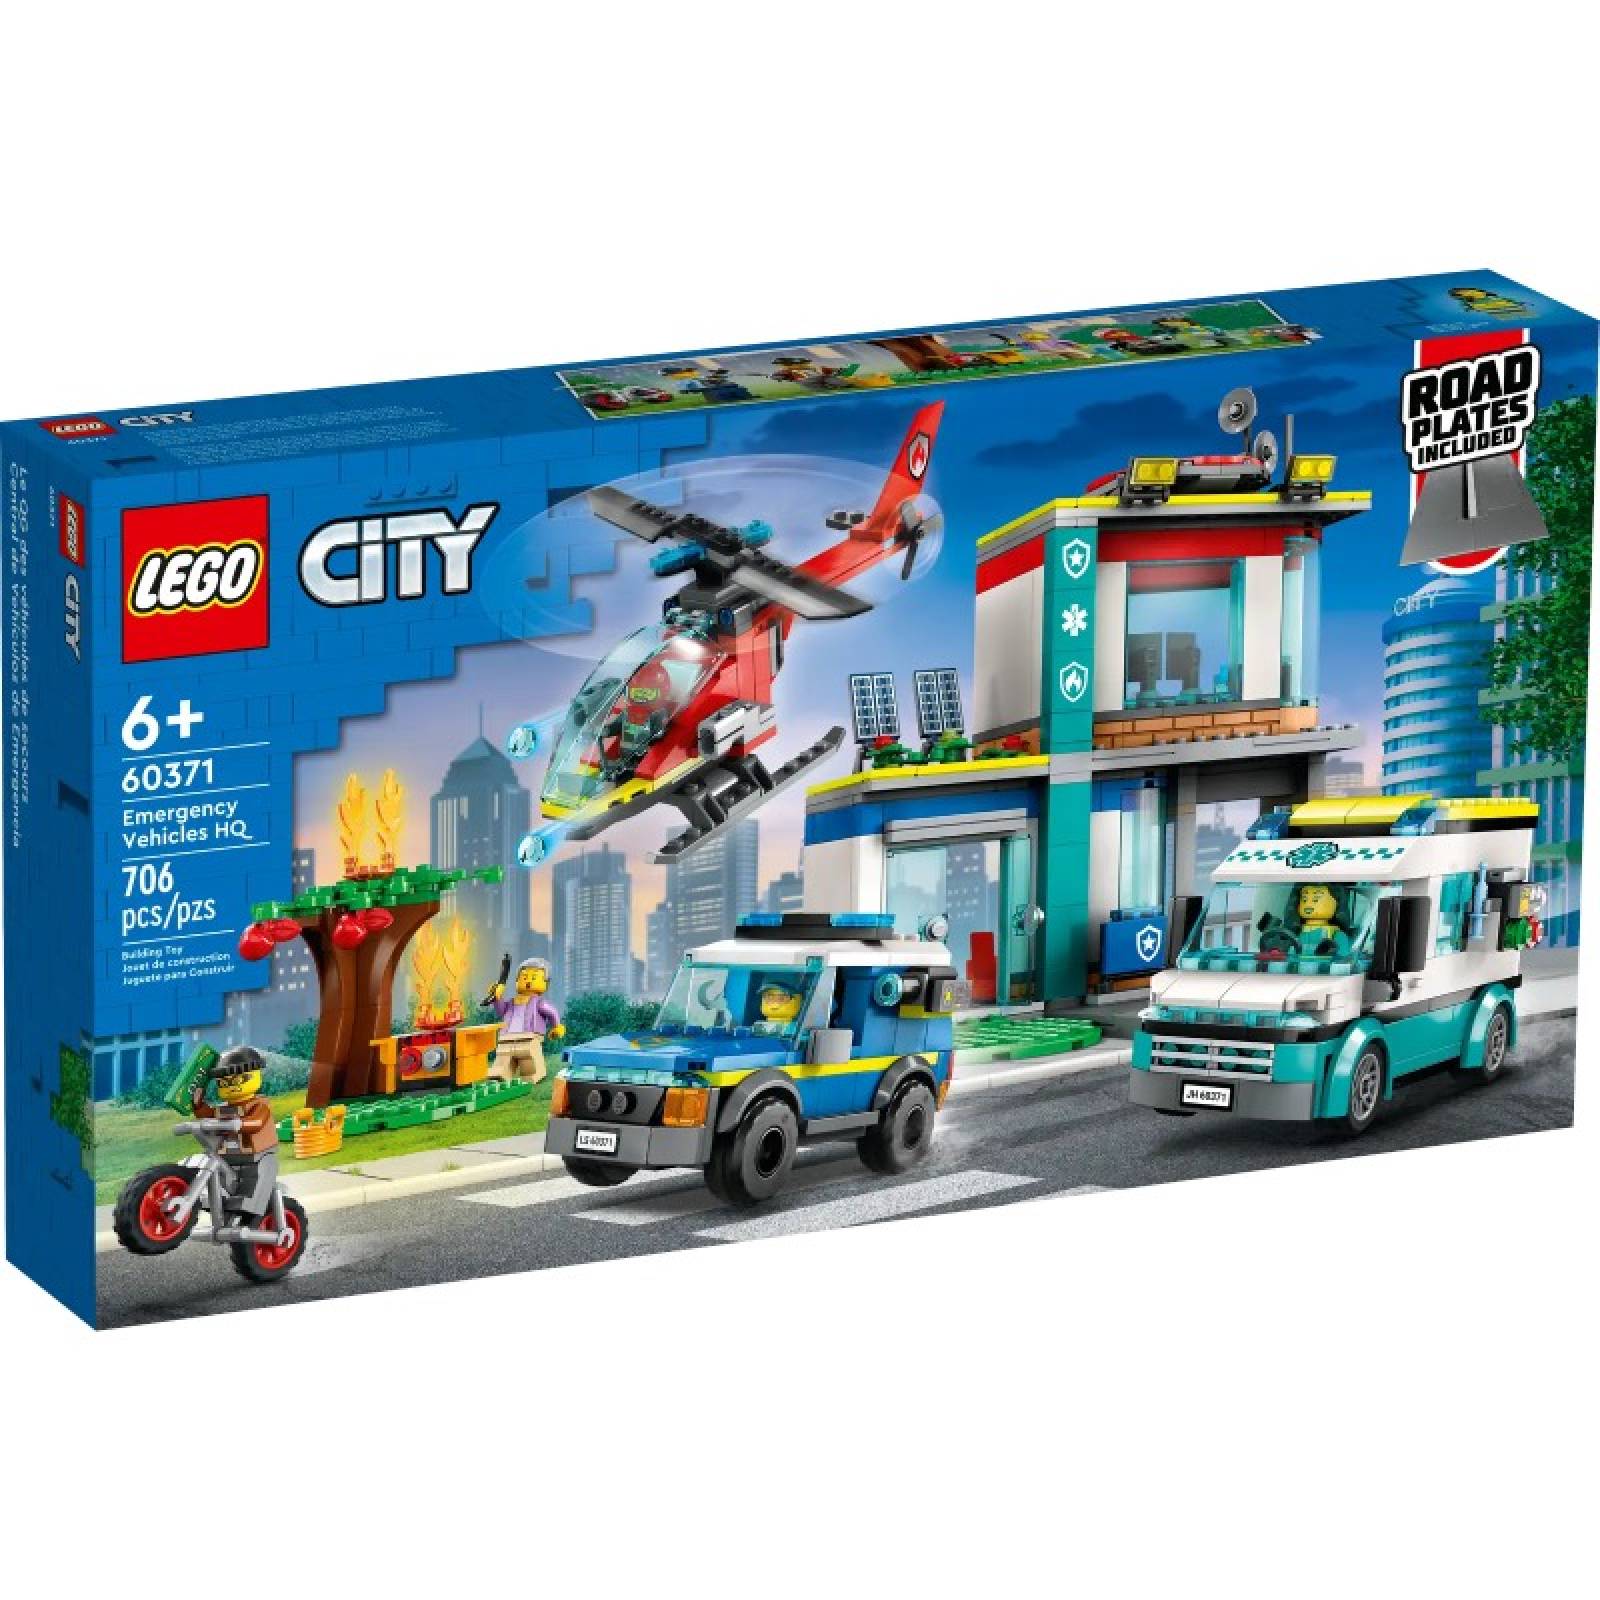 LEGO City Emergency Vehicles HQ 60371 6+